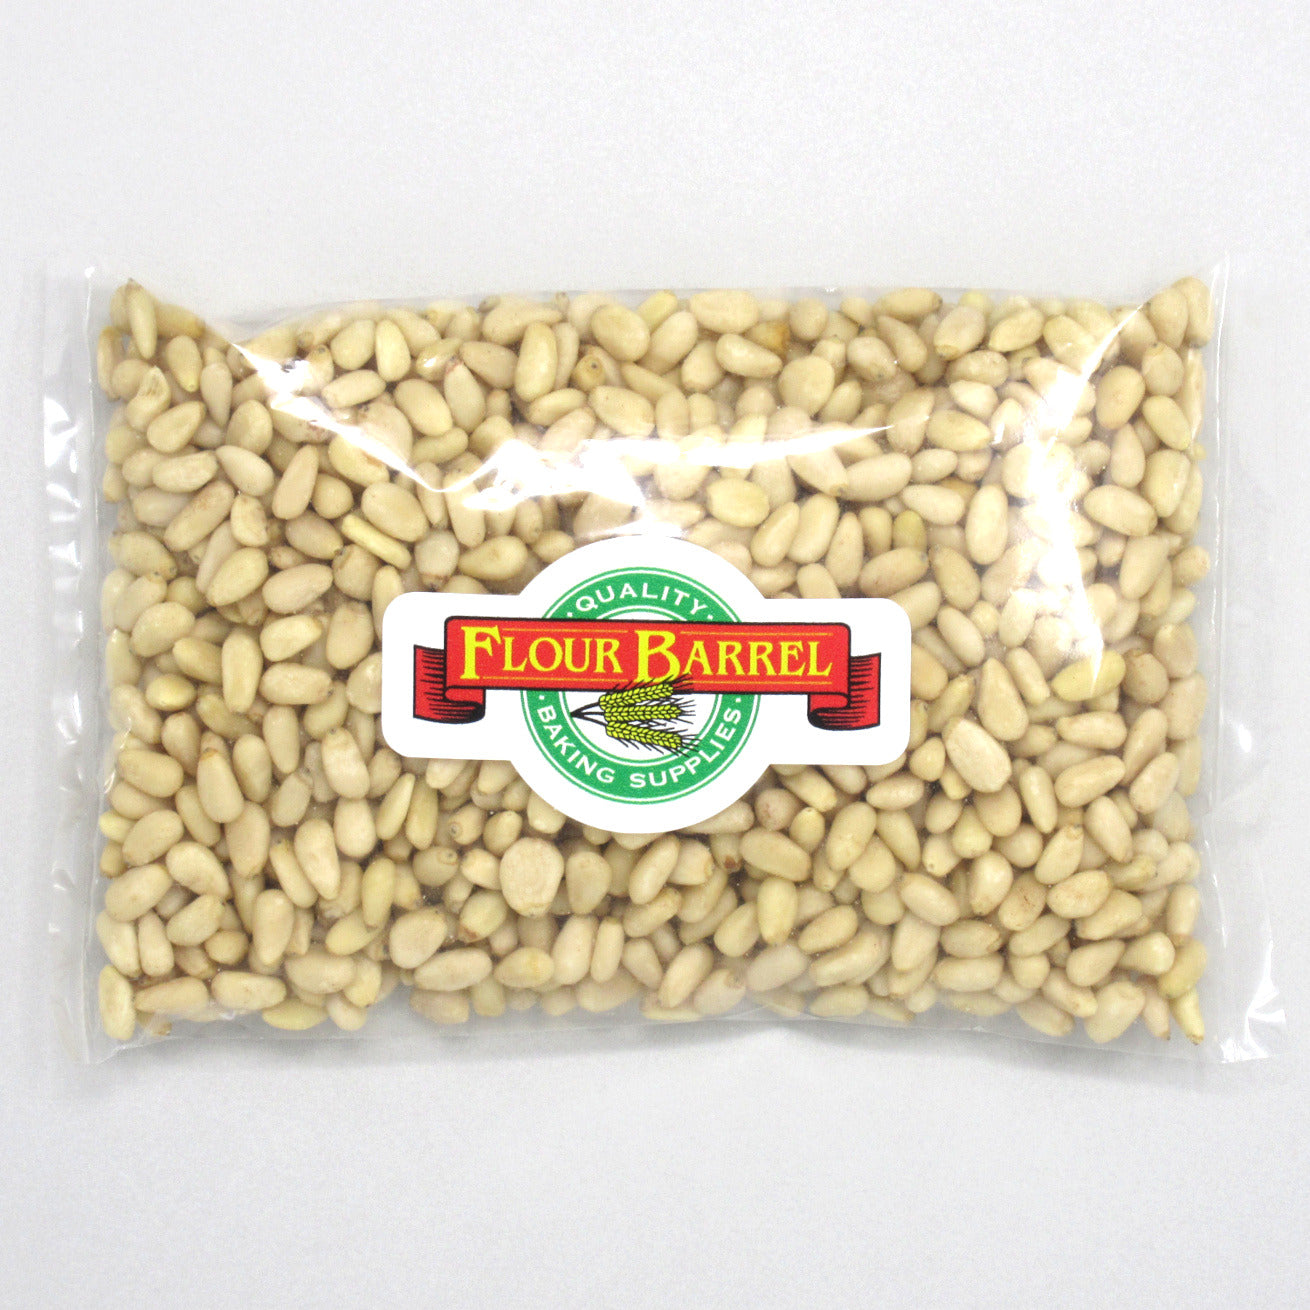 Flour Barrel product image - Pine Nuts